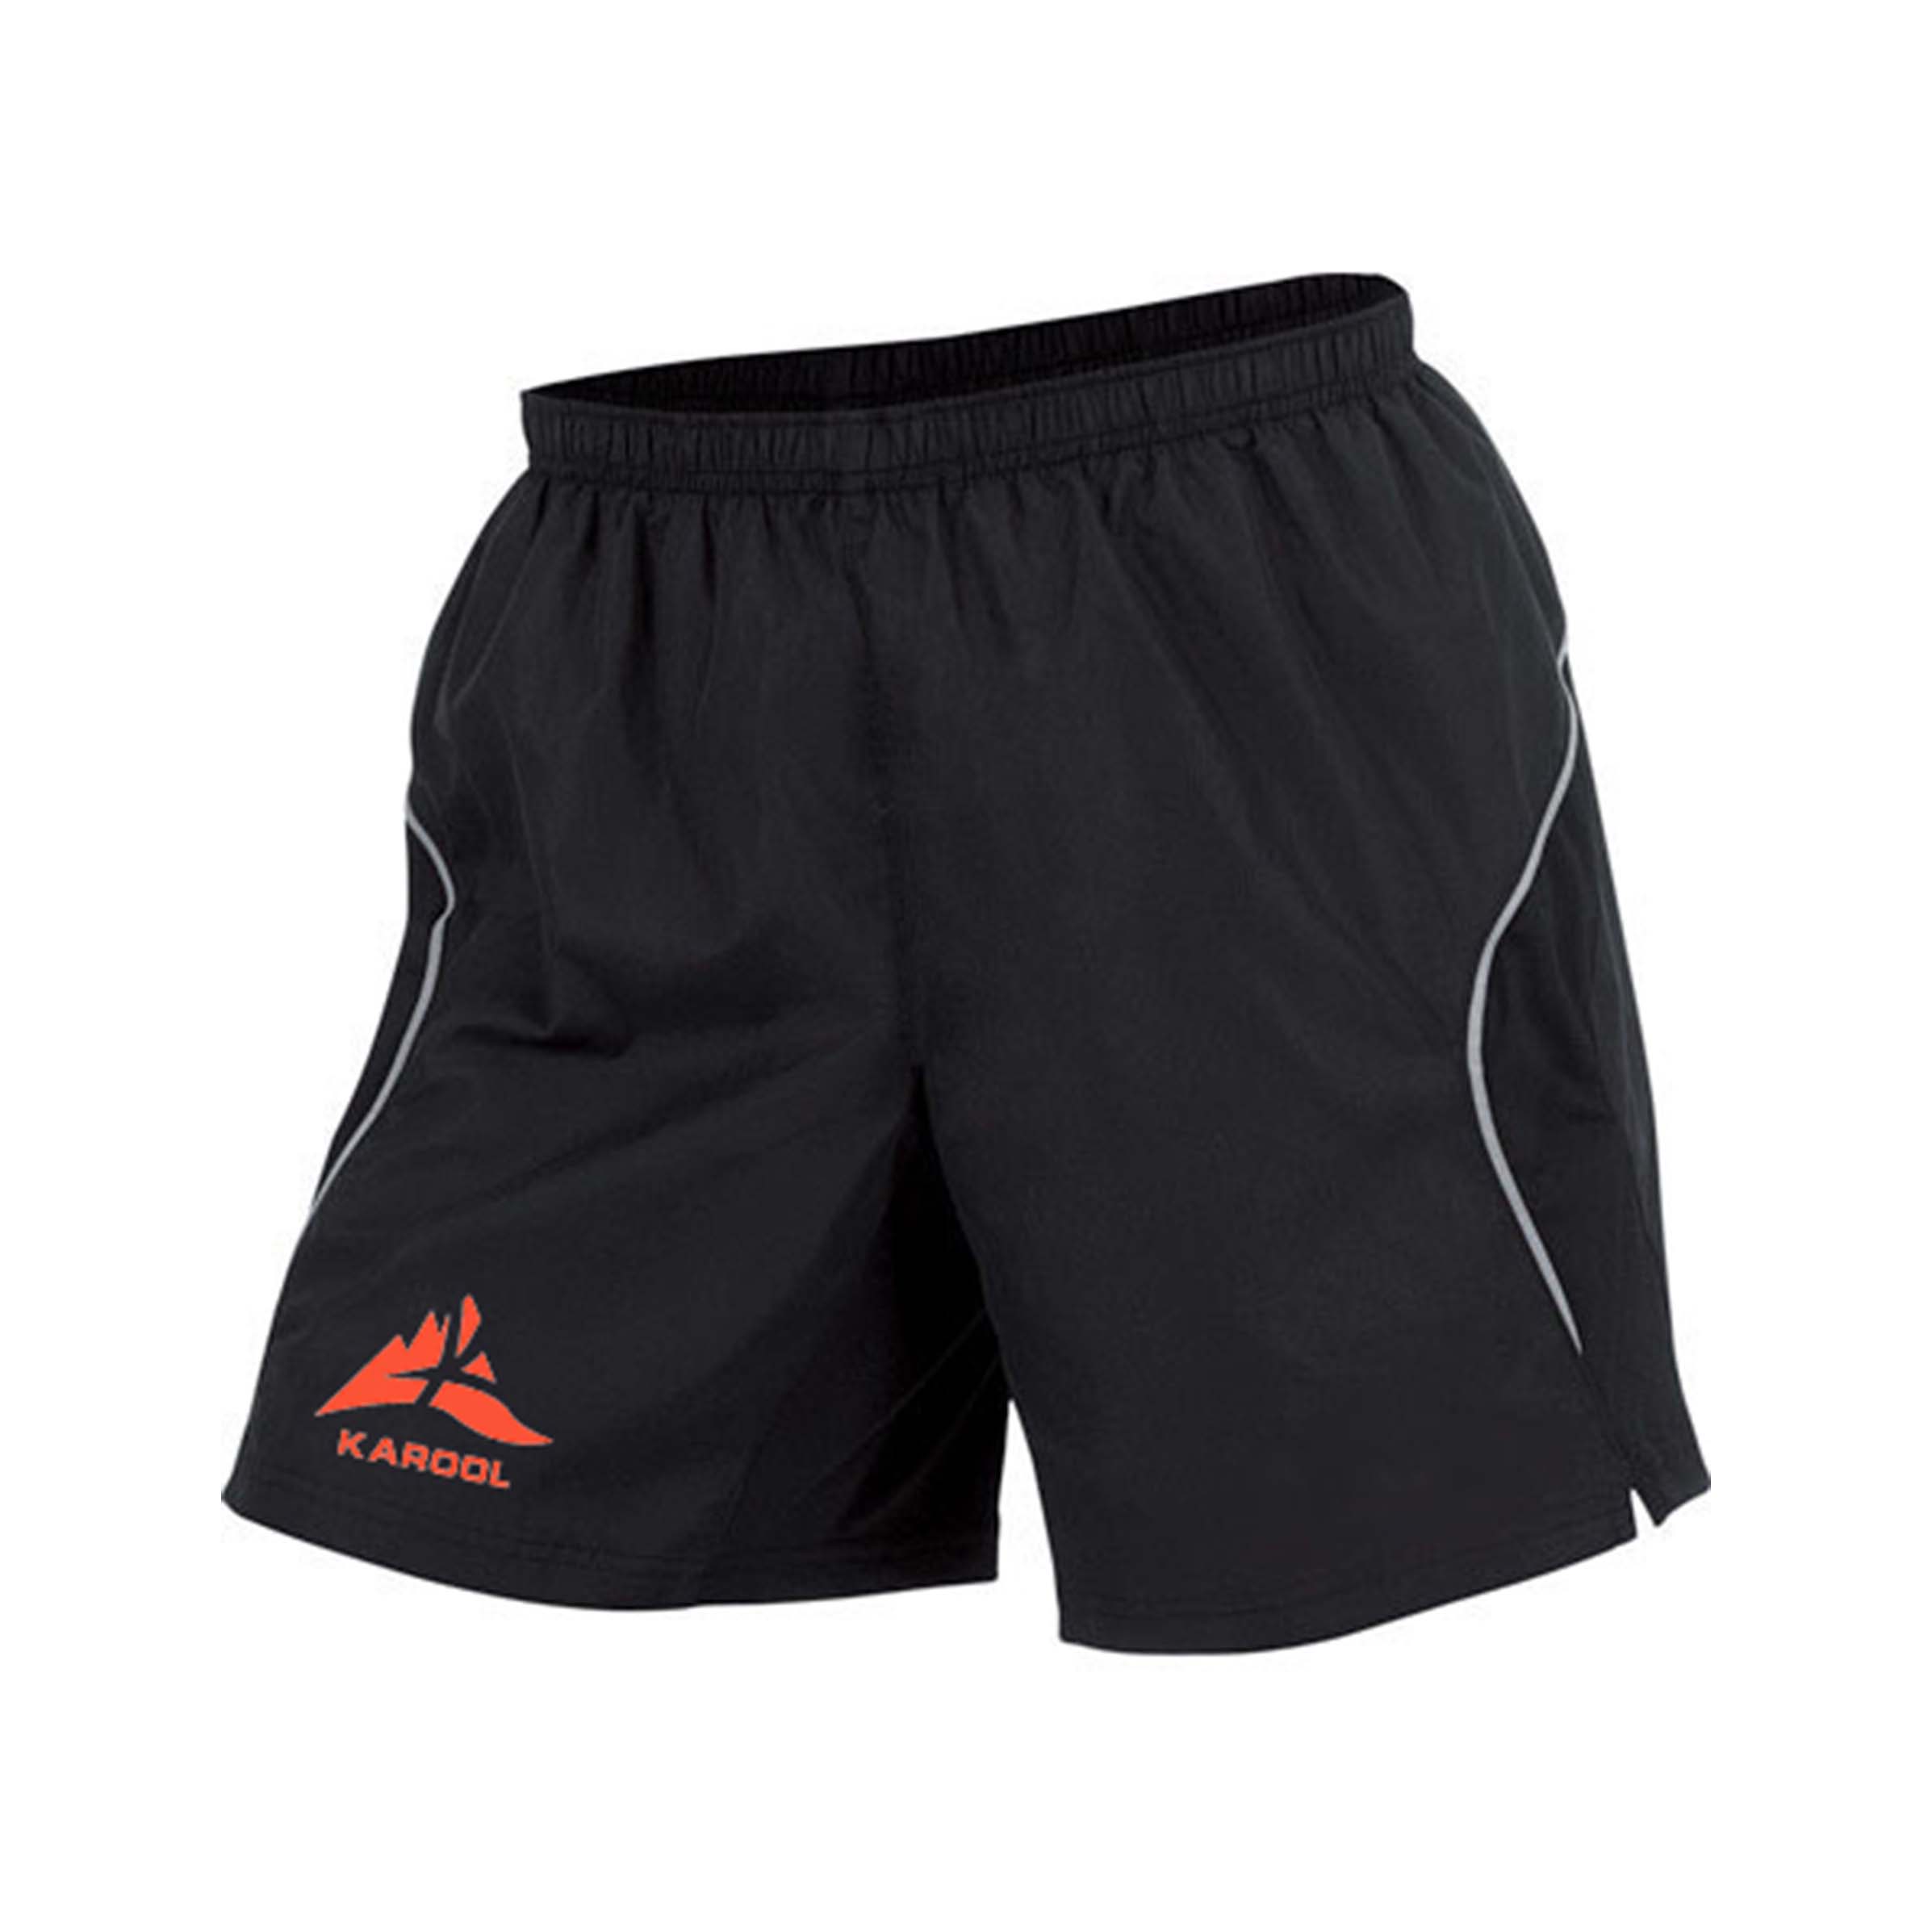 Karool casual running compression shorts customization for children-1